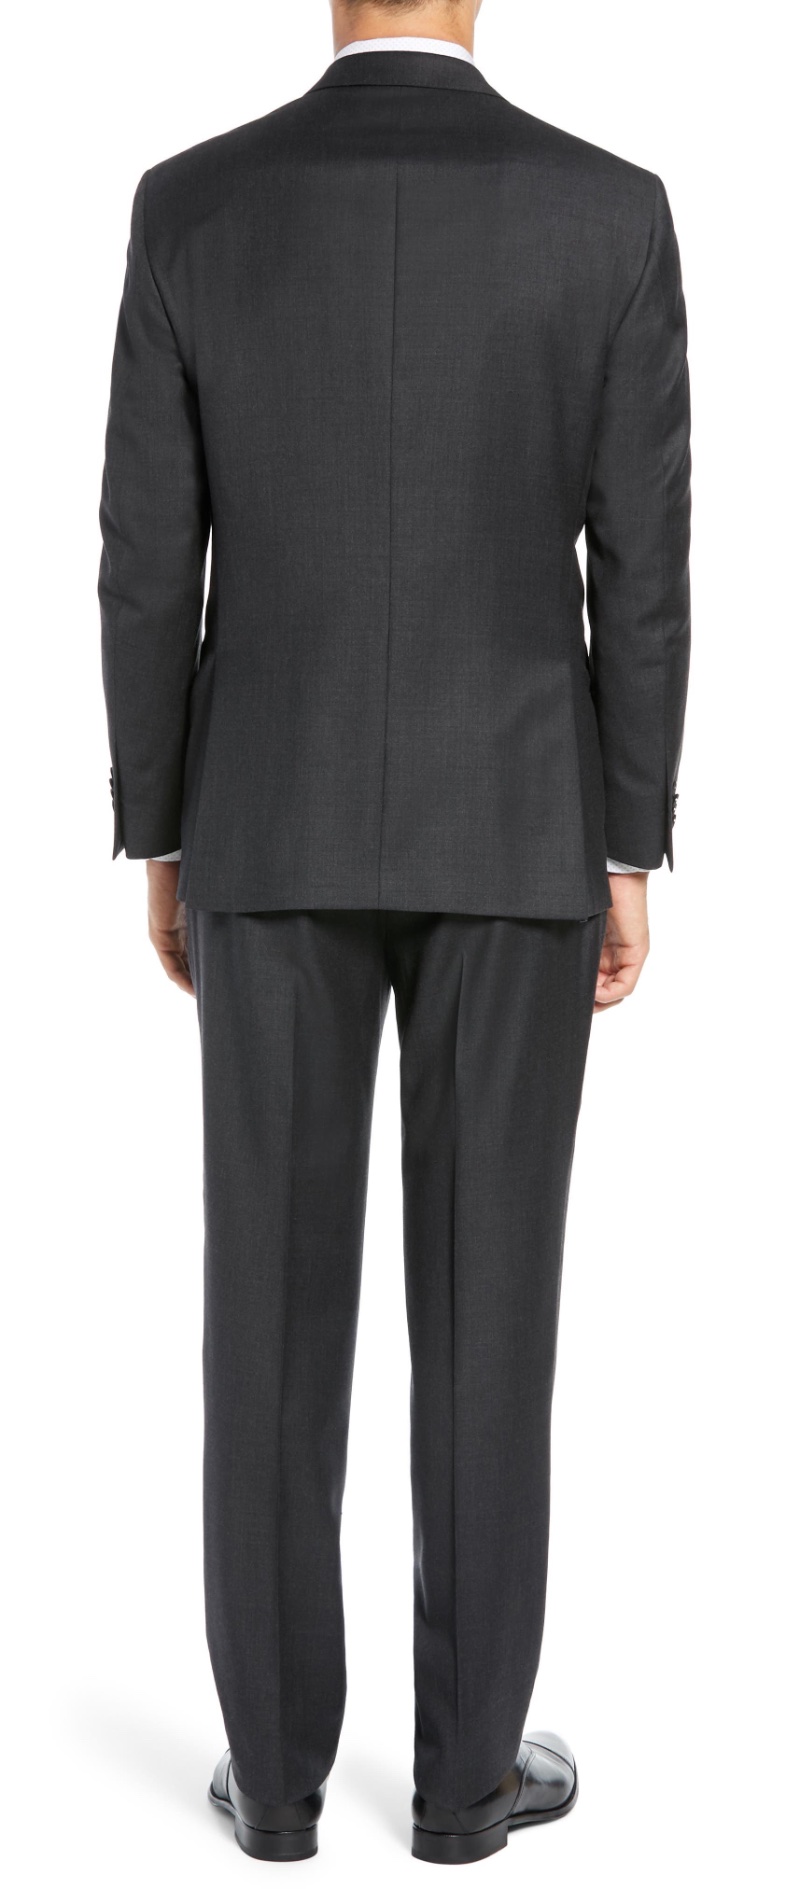 Mens Suit Styles Classic Fit Peter Millar Wool Suit Back